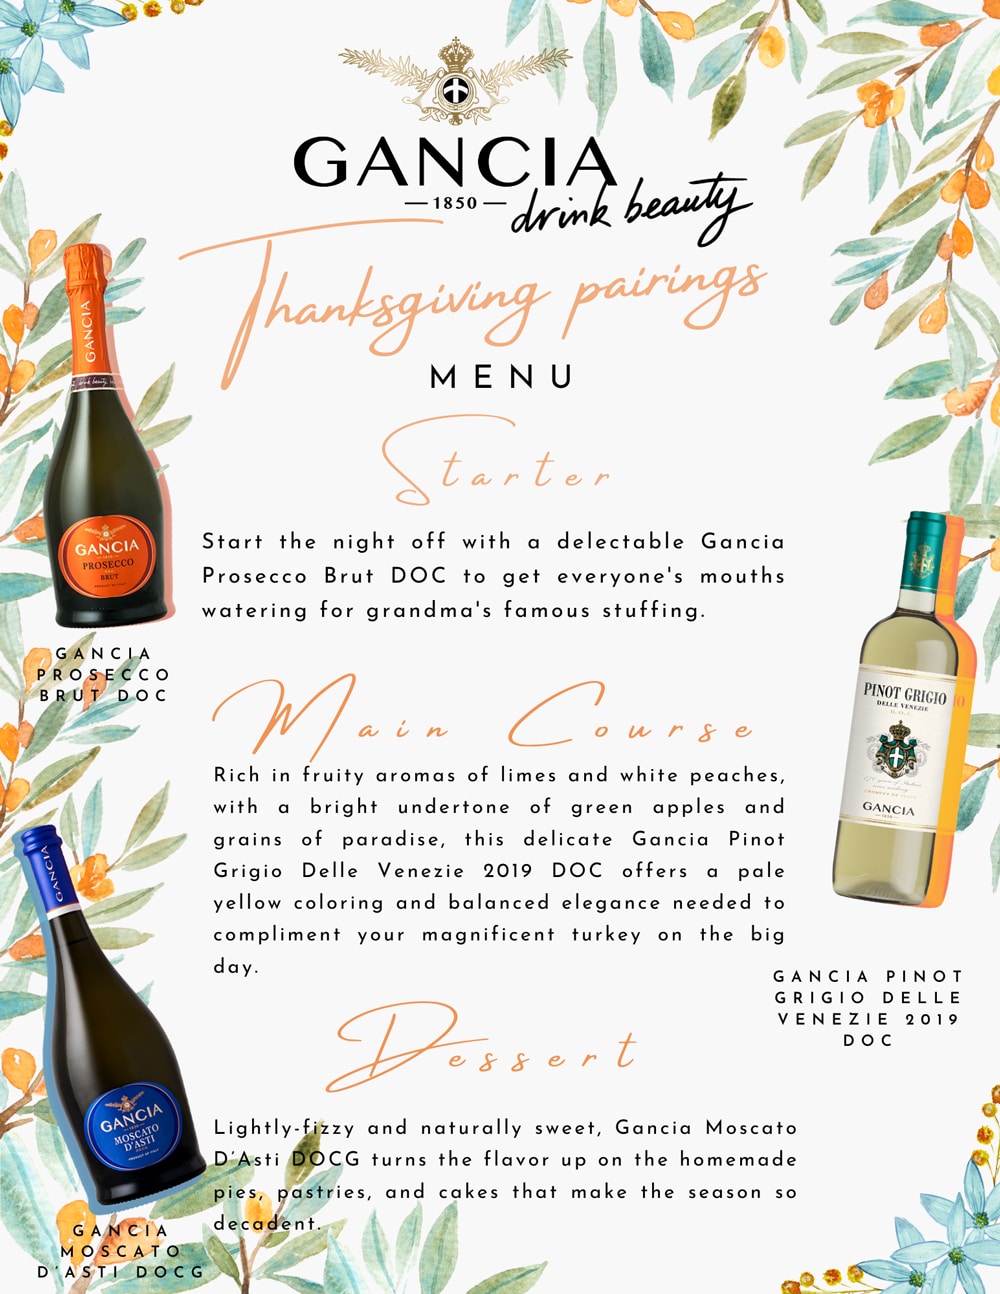 Gancia wine descriptions